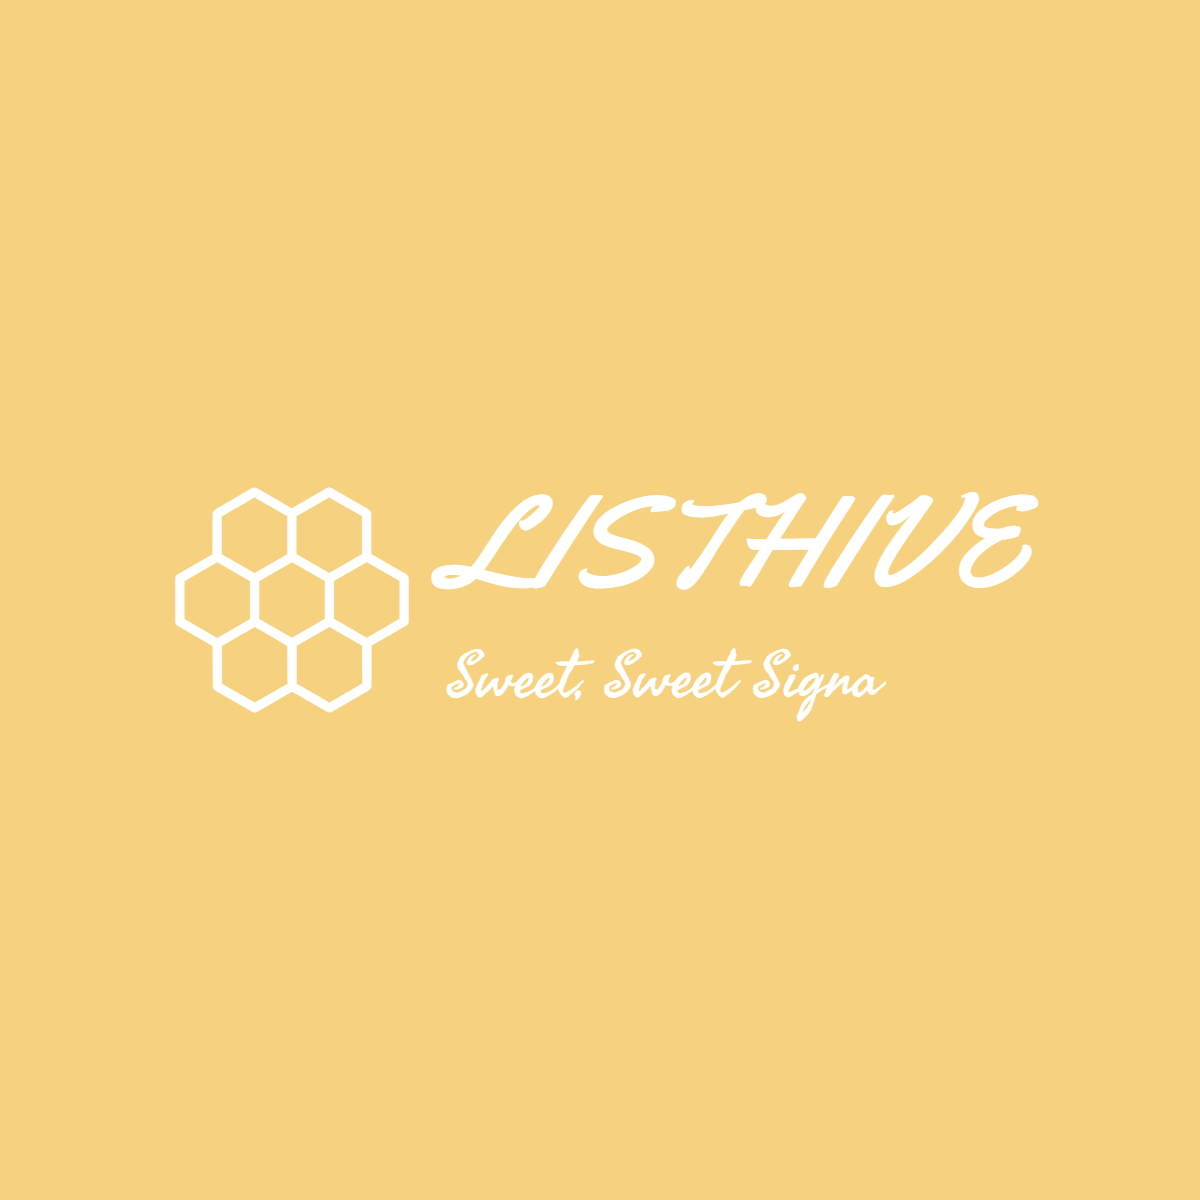  " "LISTHIVE-logos.jpeg""